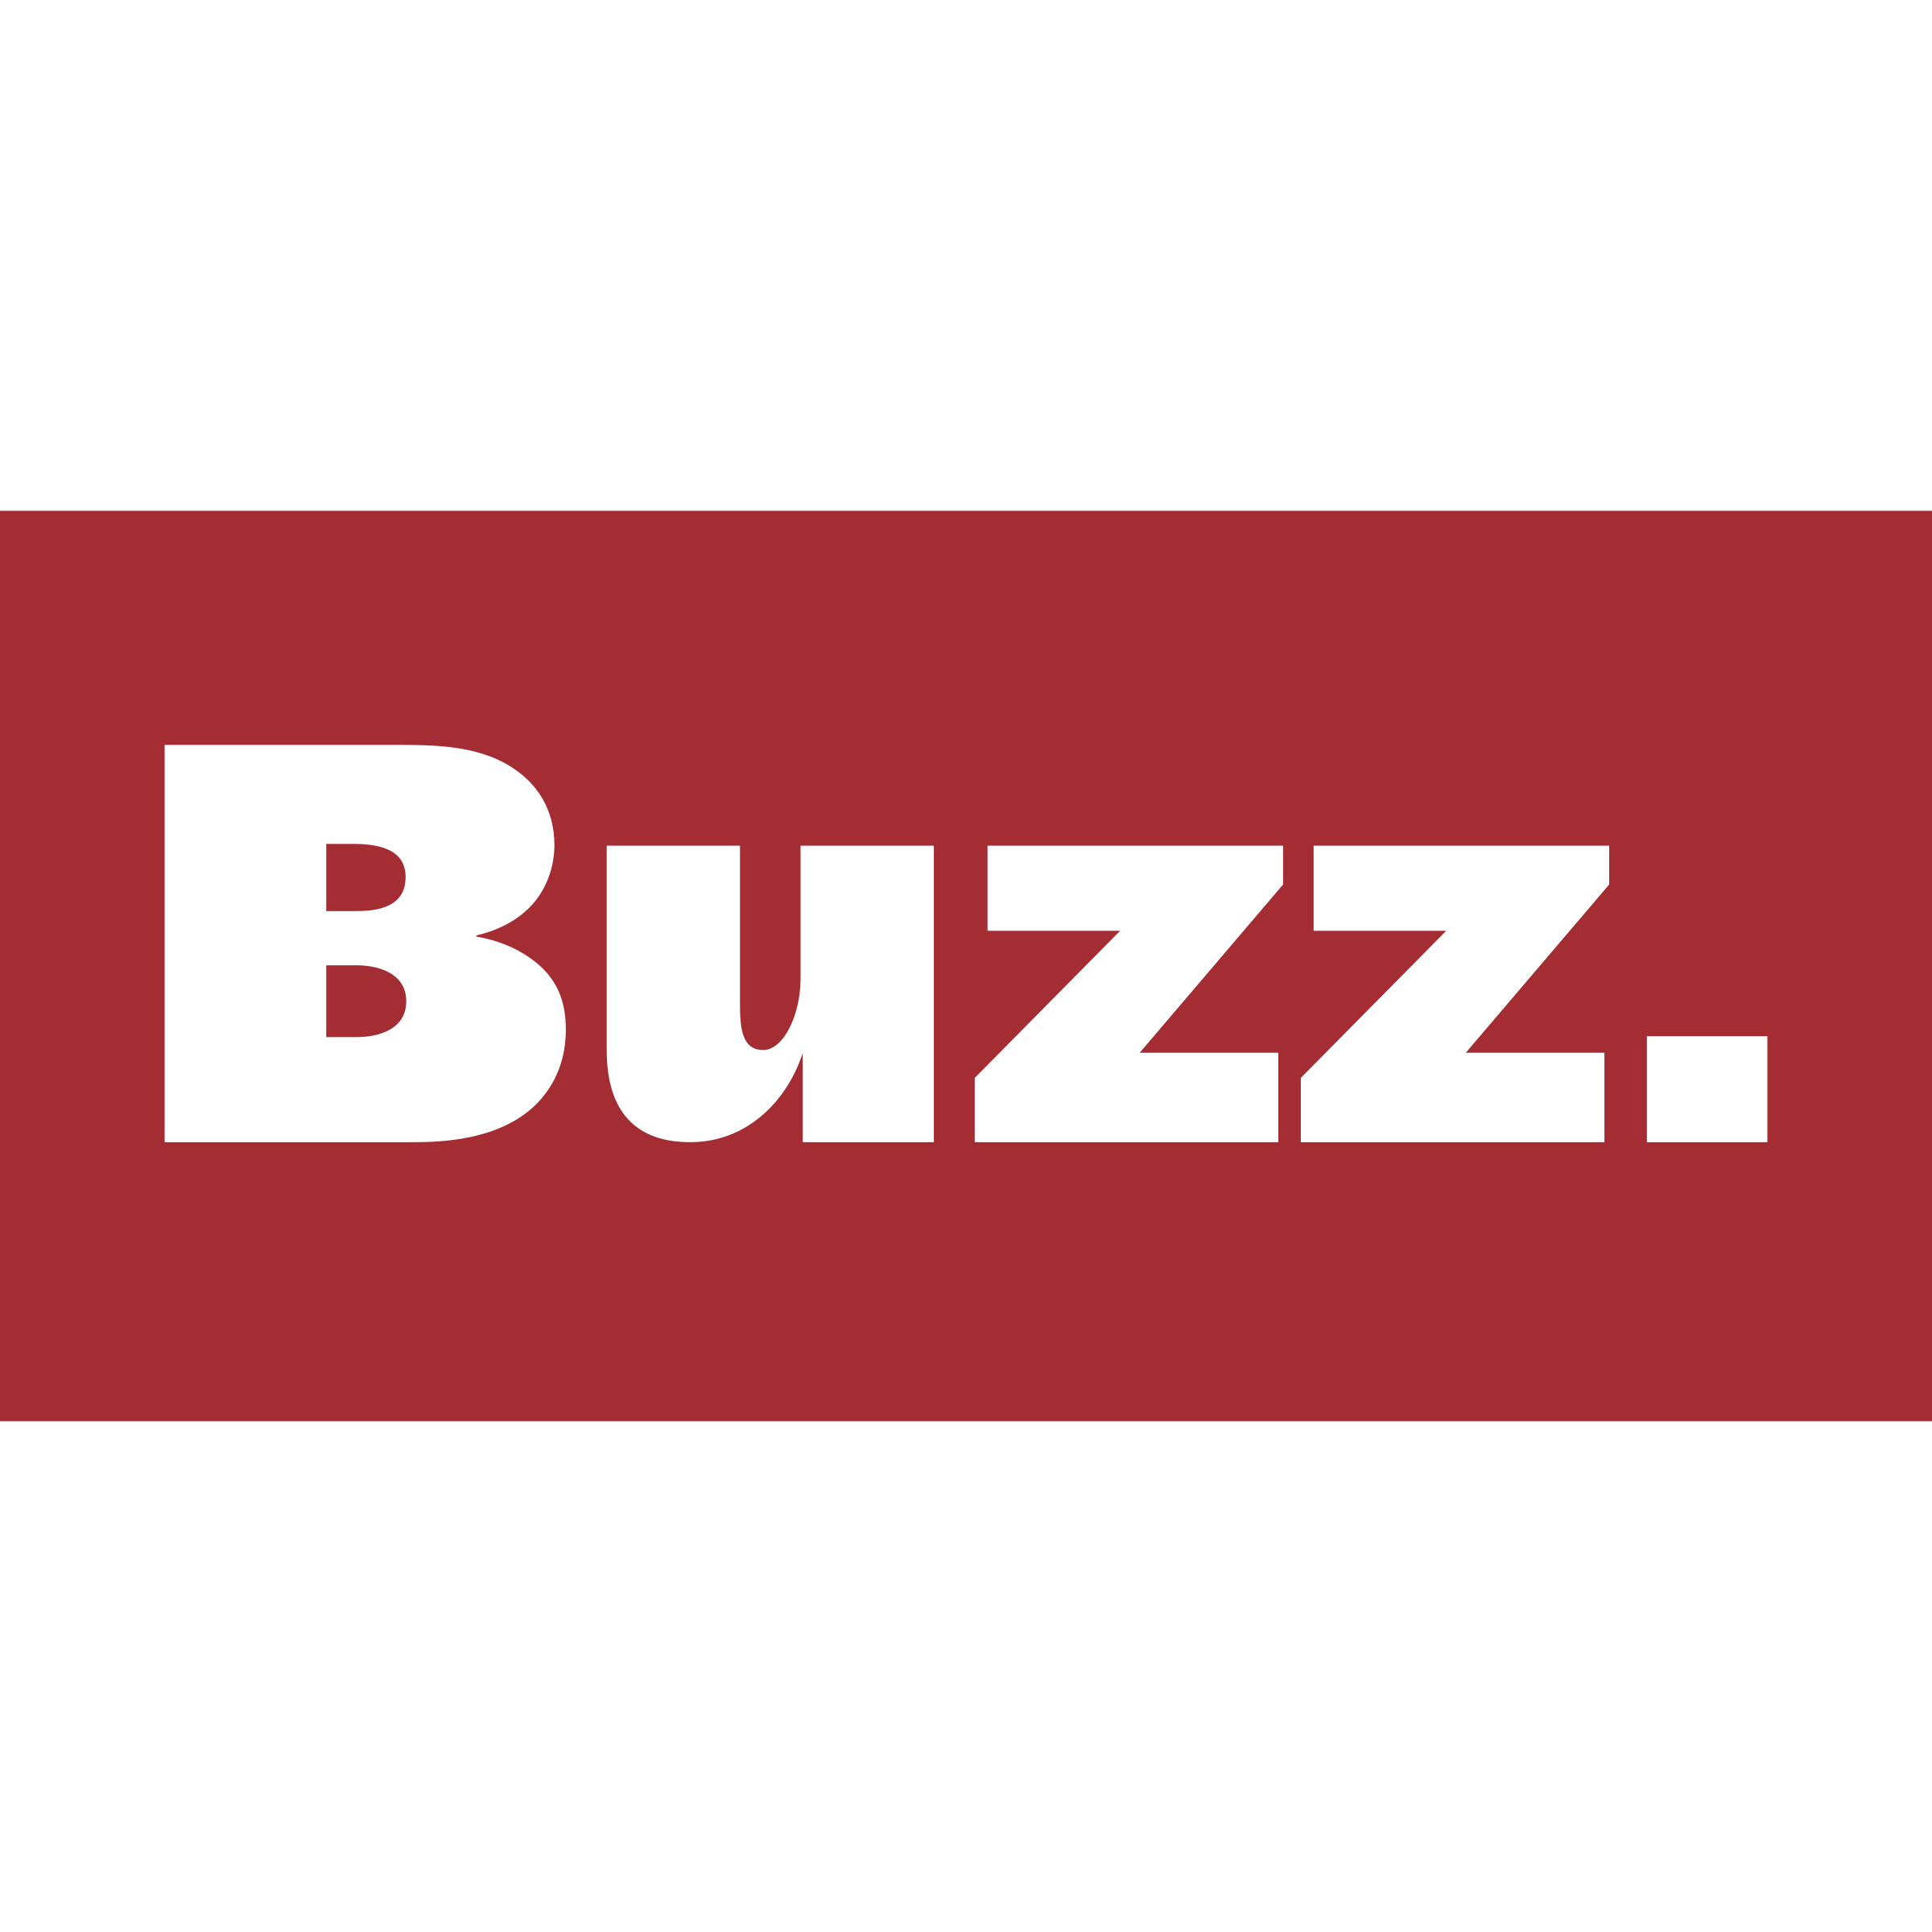 Buzz Logo - Buzz Logo PNG Transparent & SVG Vector - Freebie Supply